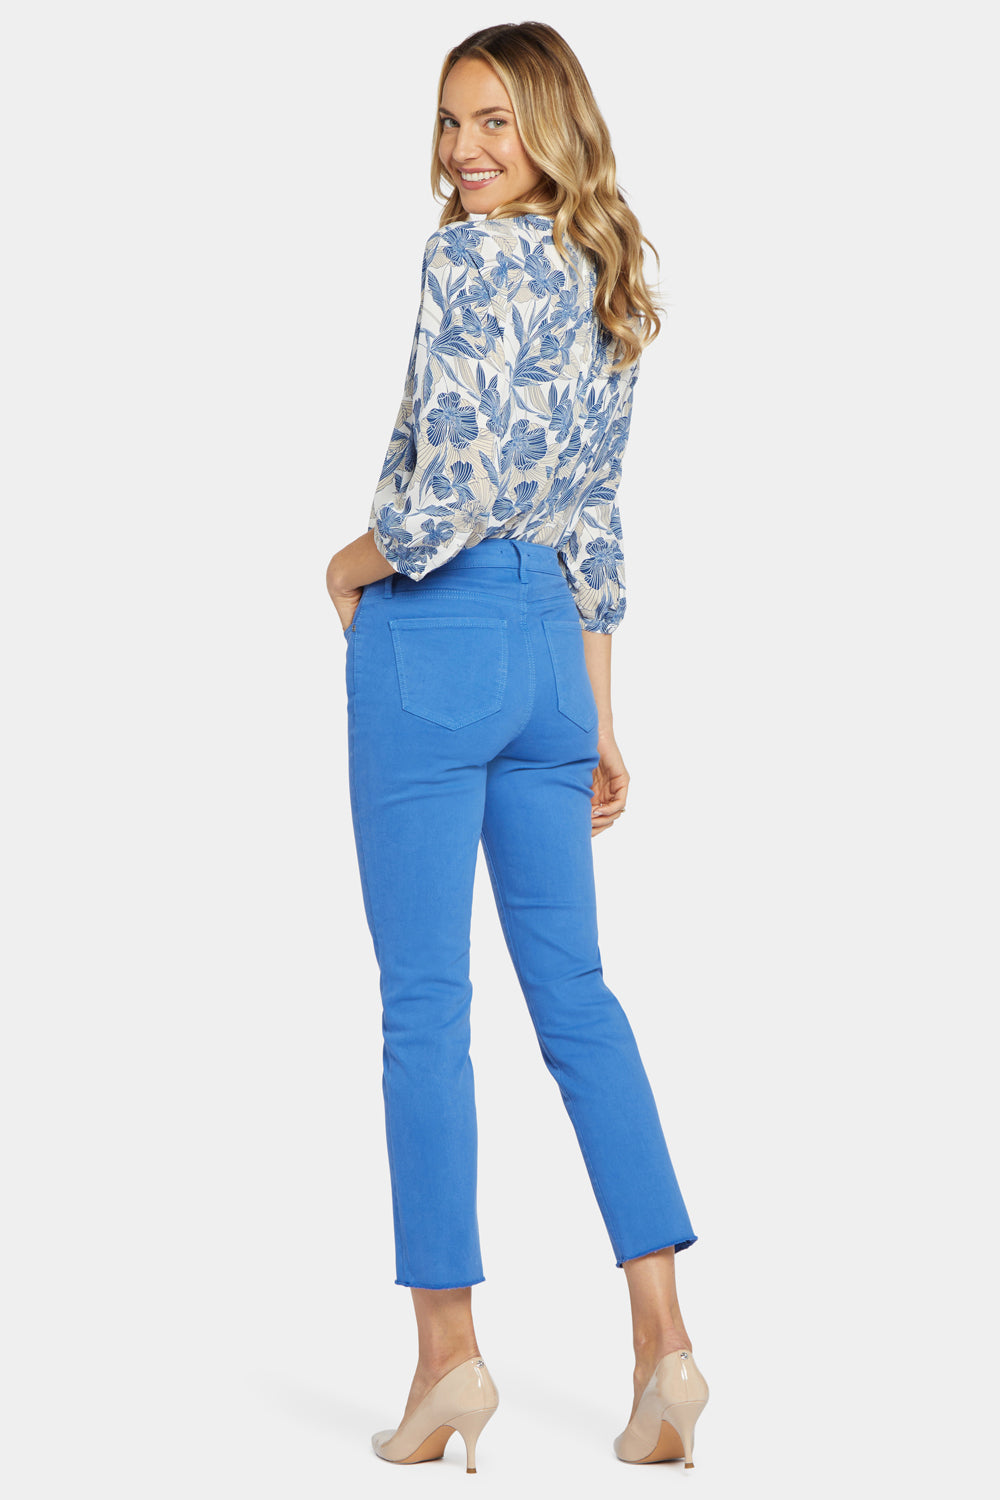 NYDJ Sheri Slim Ankle Jeans With Frayed Hems - Swing Blue